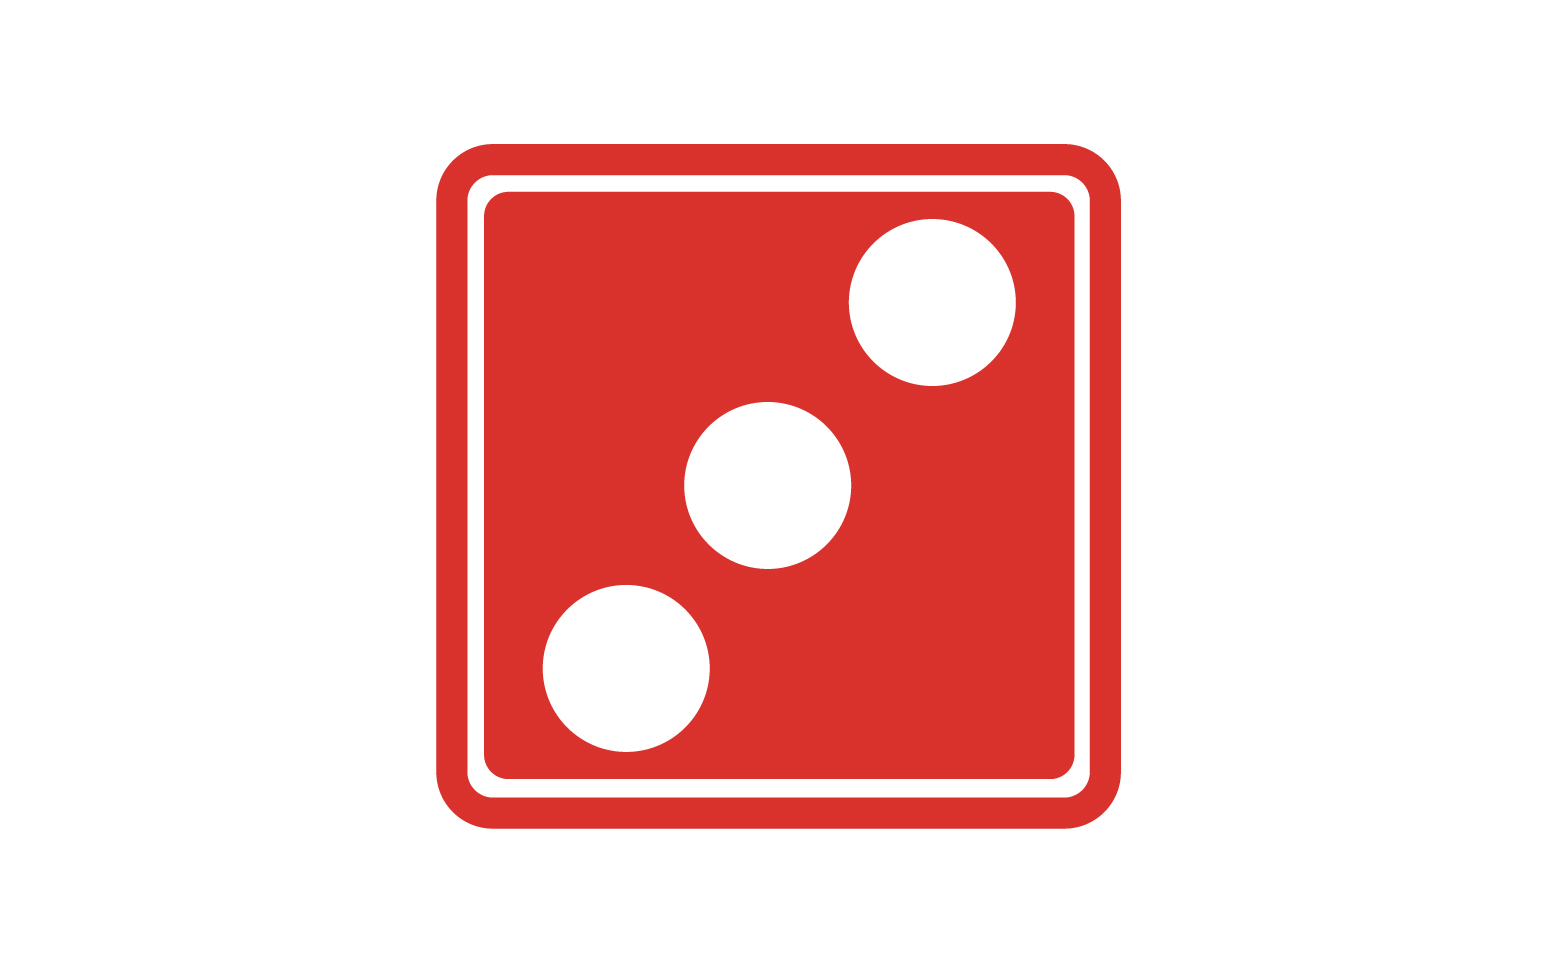 Dice game poxer logo icon  template version v59